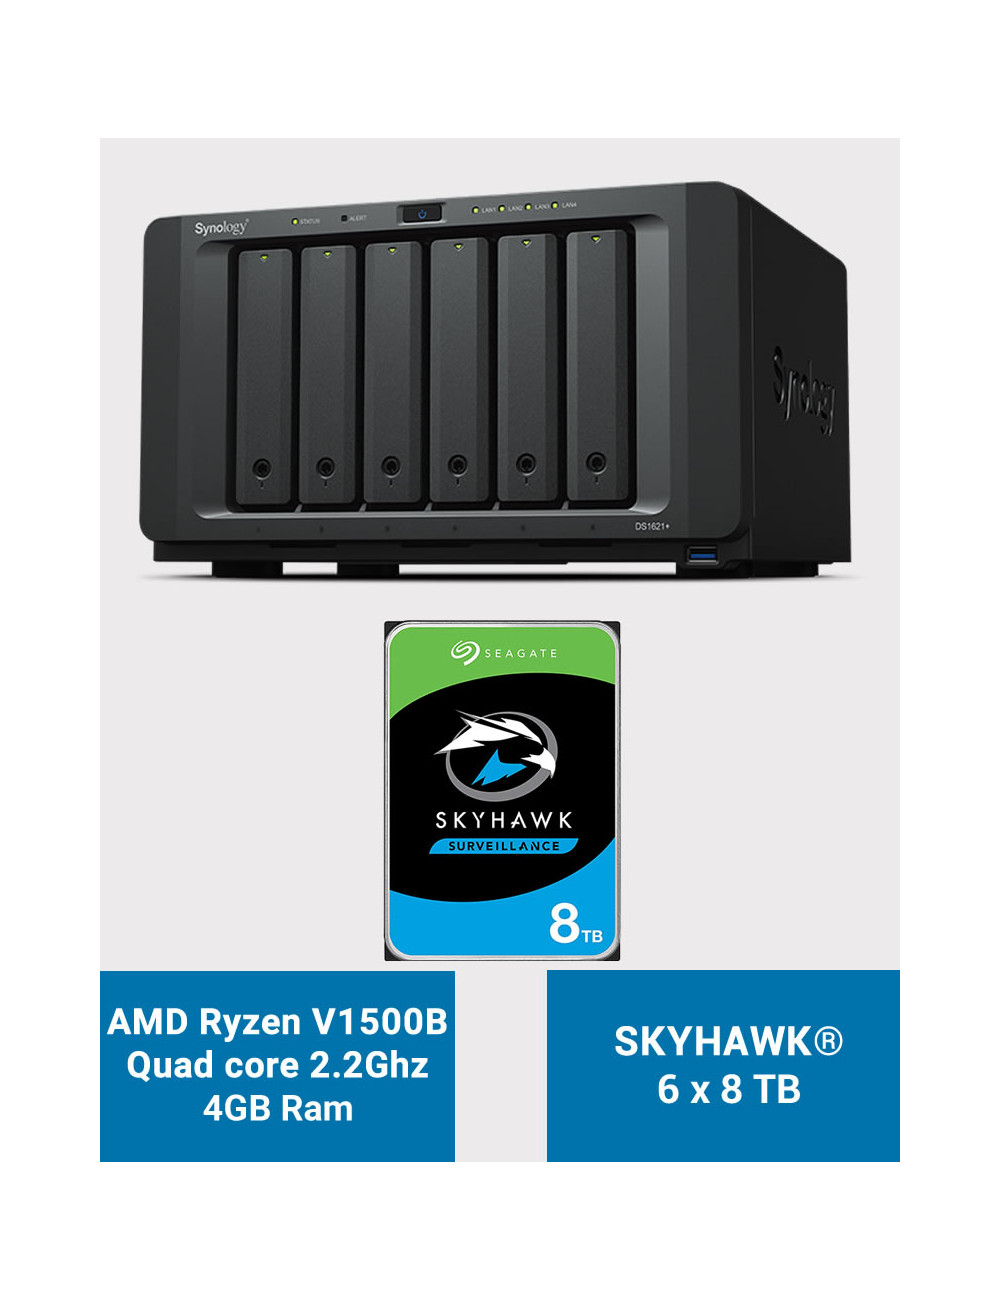 Synology DS1621+ NAS Server SkyHawk 48TB (6x8TB)